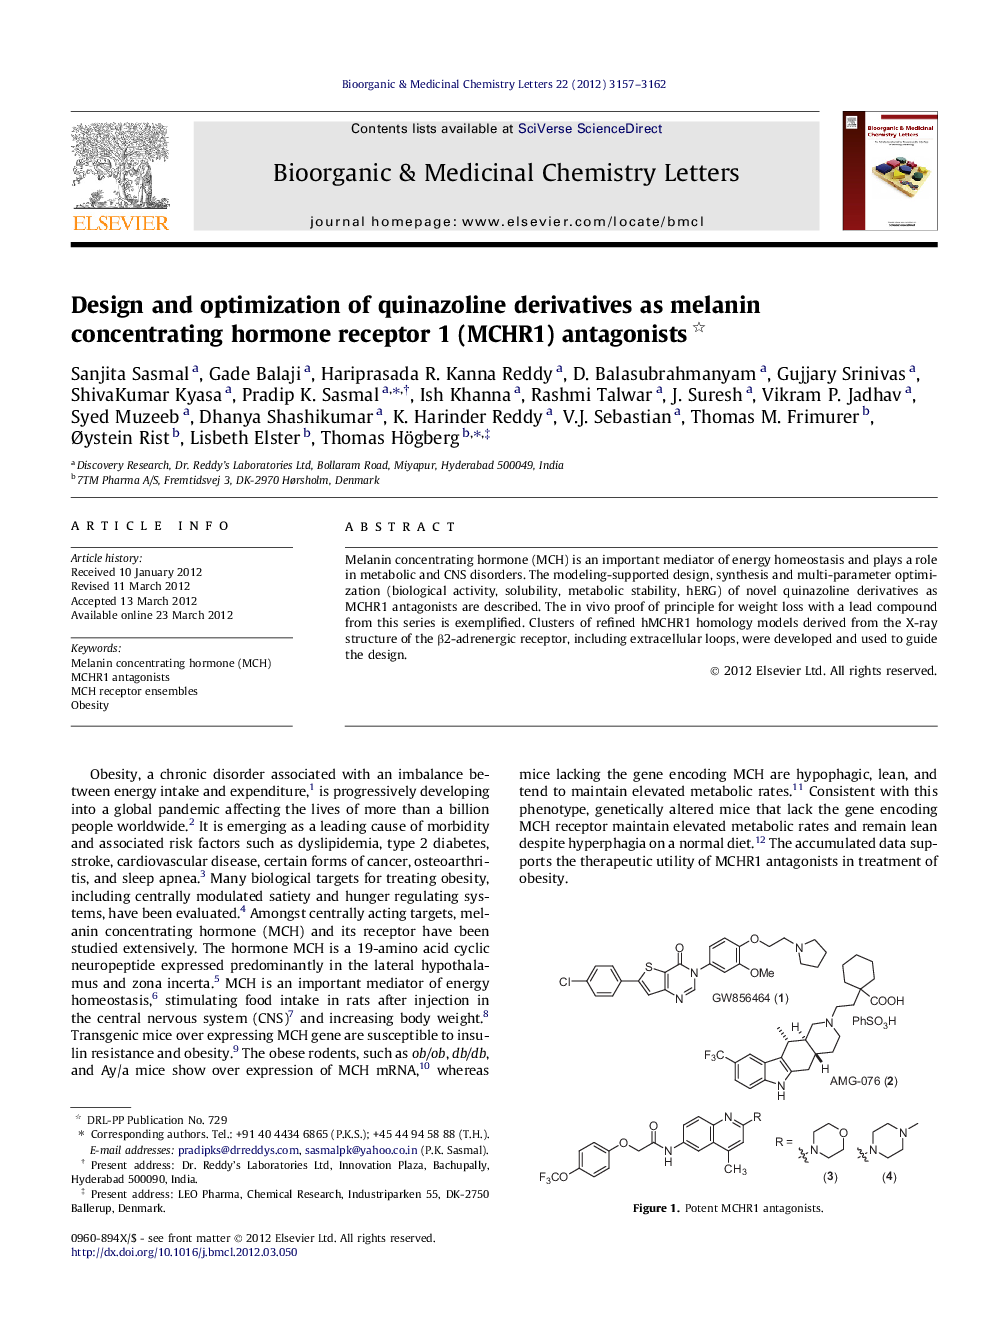 Design and optimization of quinazoline derivatives as melanin concentrating hormone receptor 1 (MCHR1) antagonists